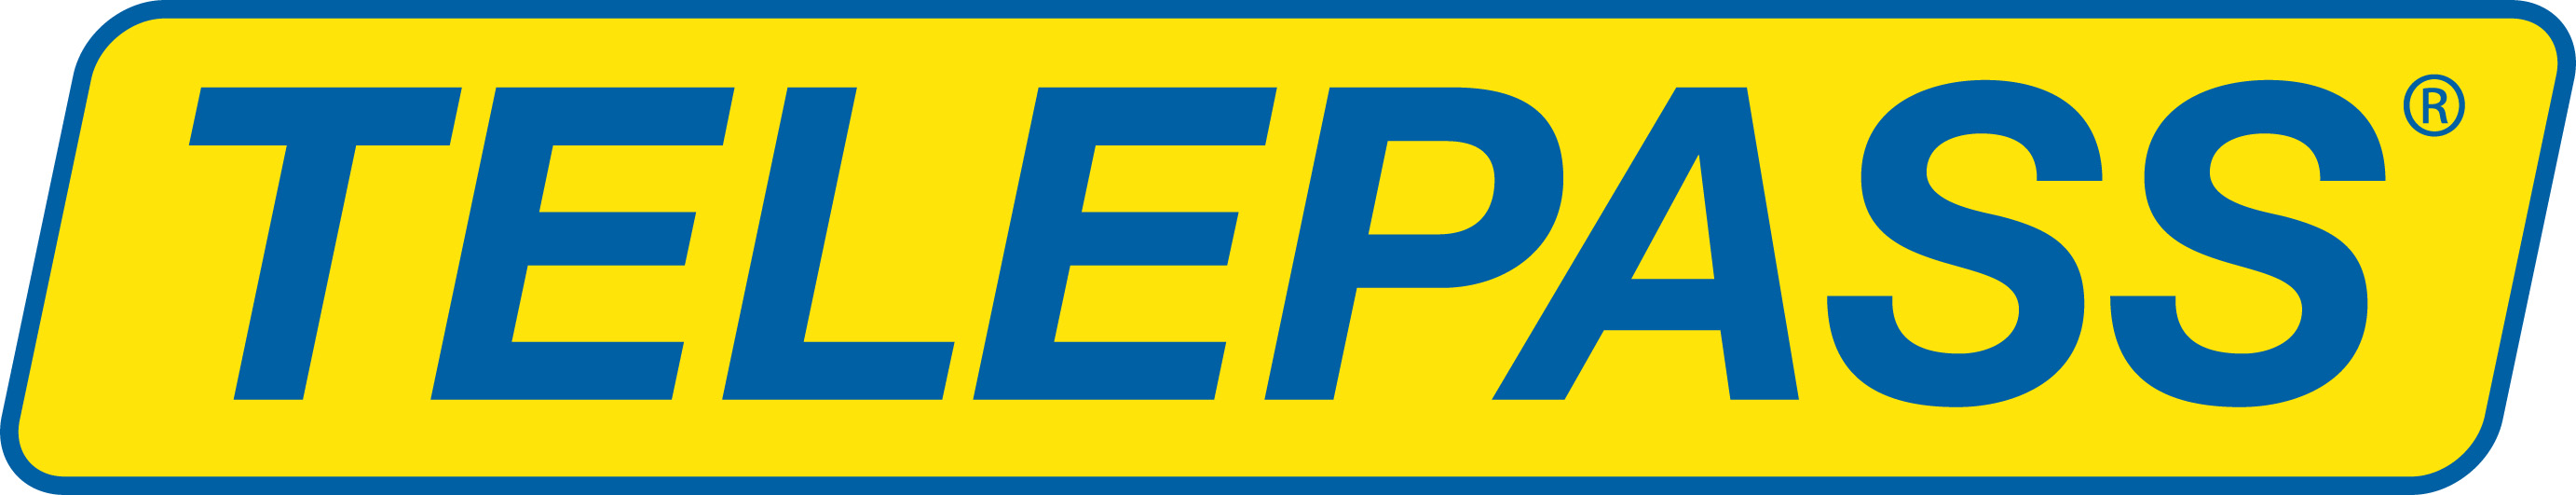 TELEPASS Logo photo - 1